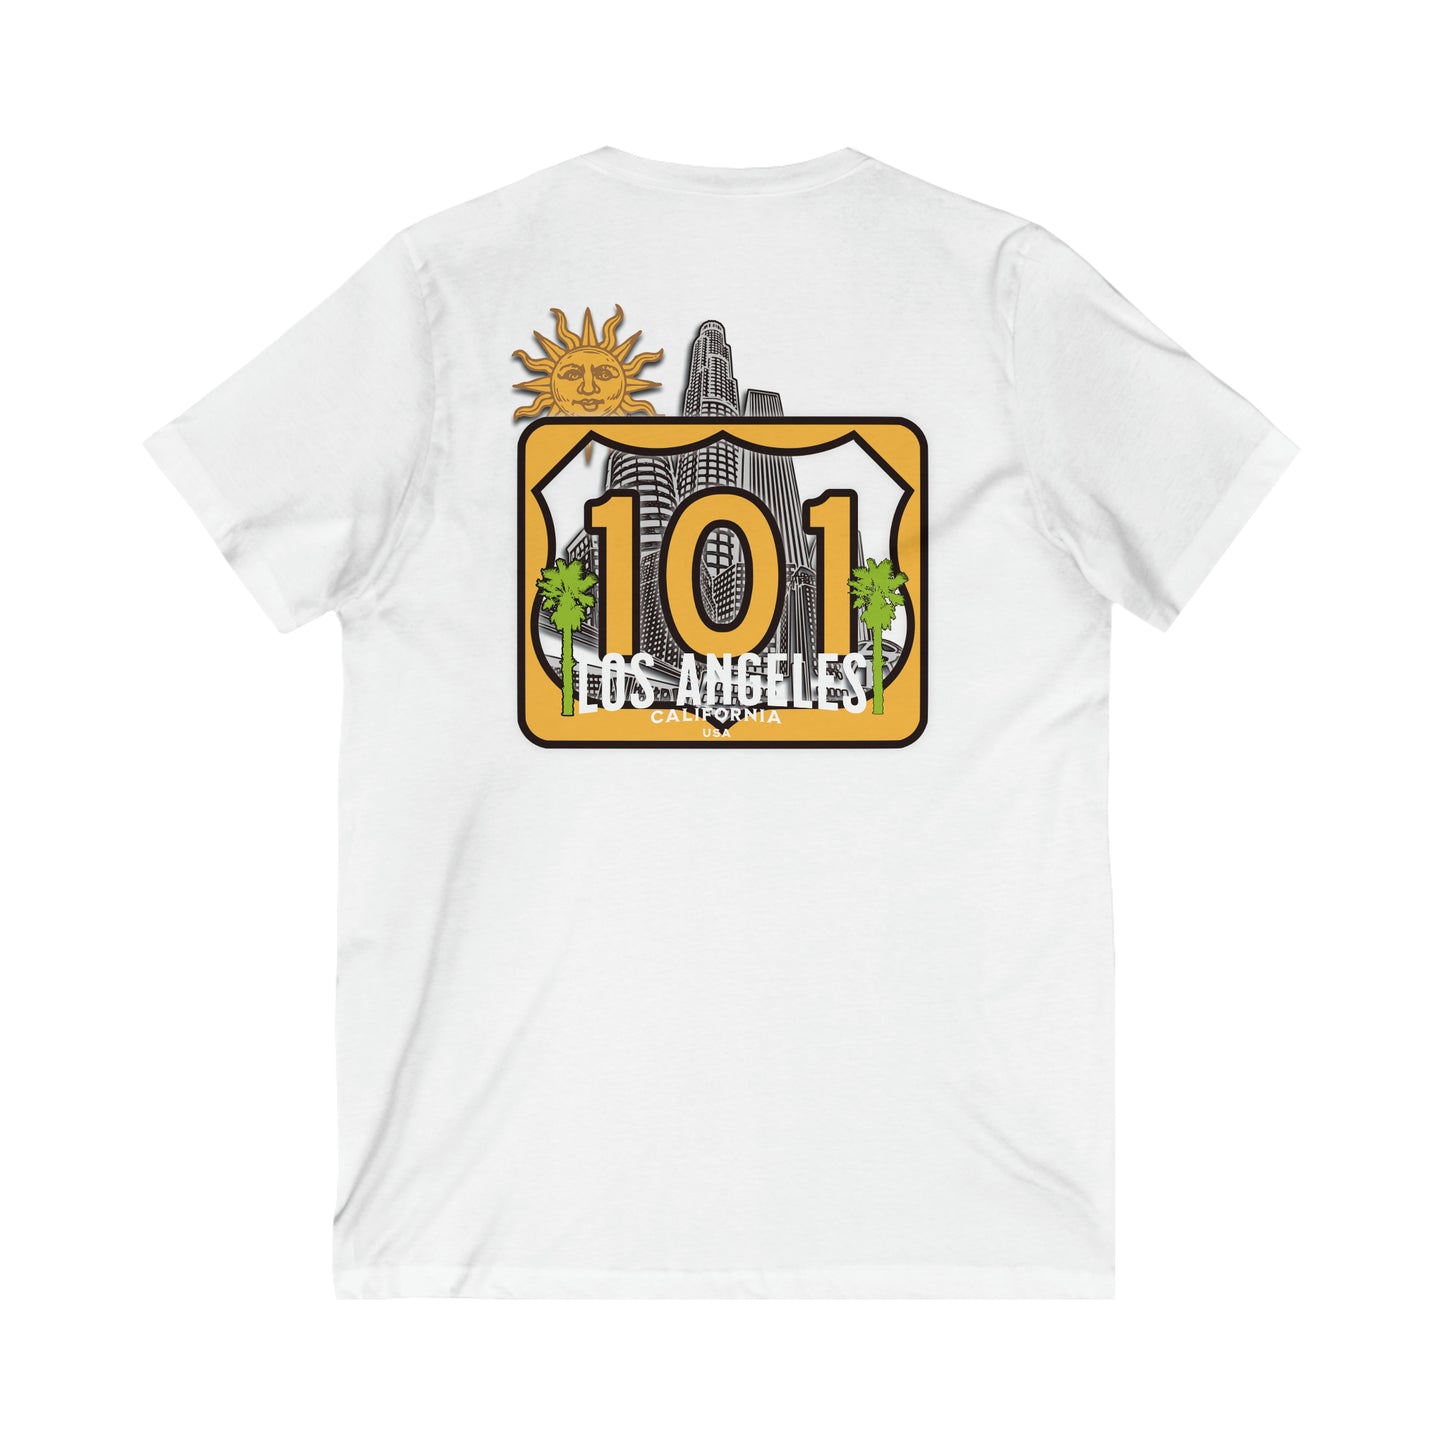 LOS ANGELES FREEWAY 101, Unisex Jersey Short Sleeve V-Neck Tee